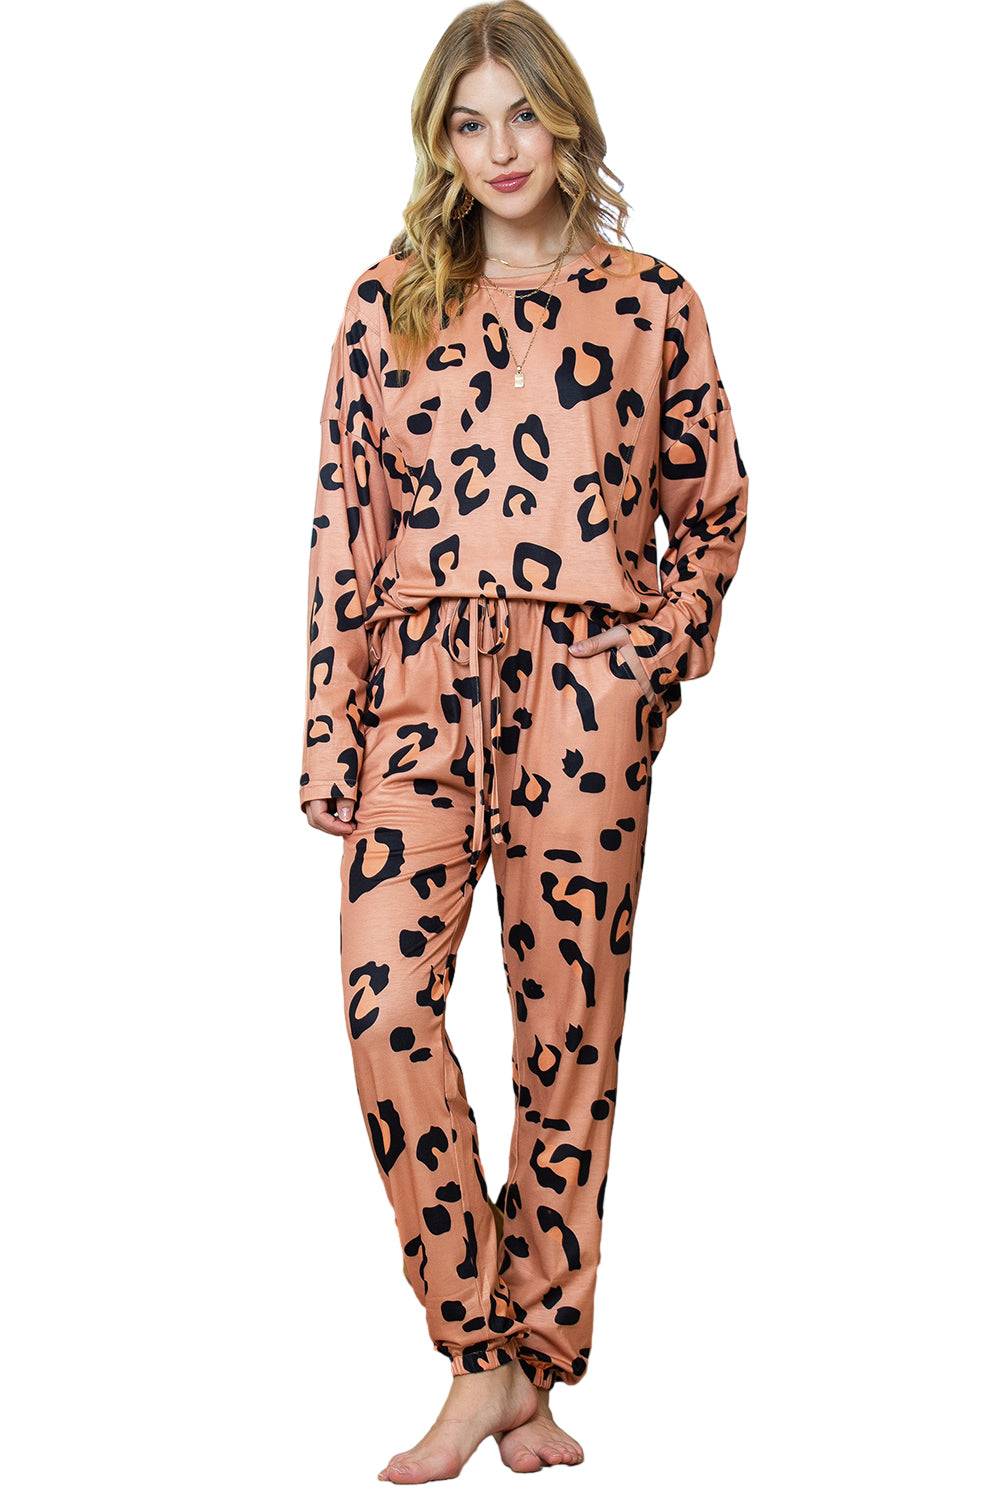 a woman wearing a pink and black animal print pajamas